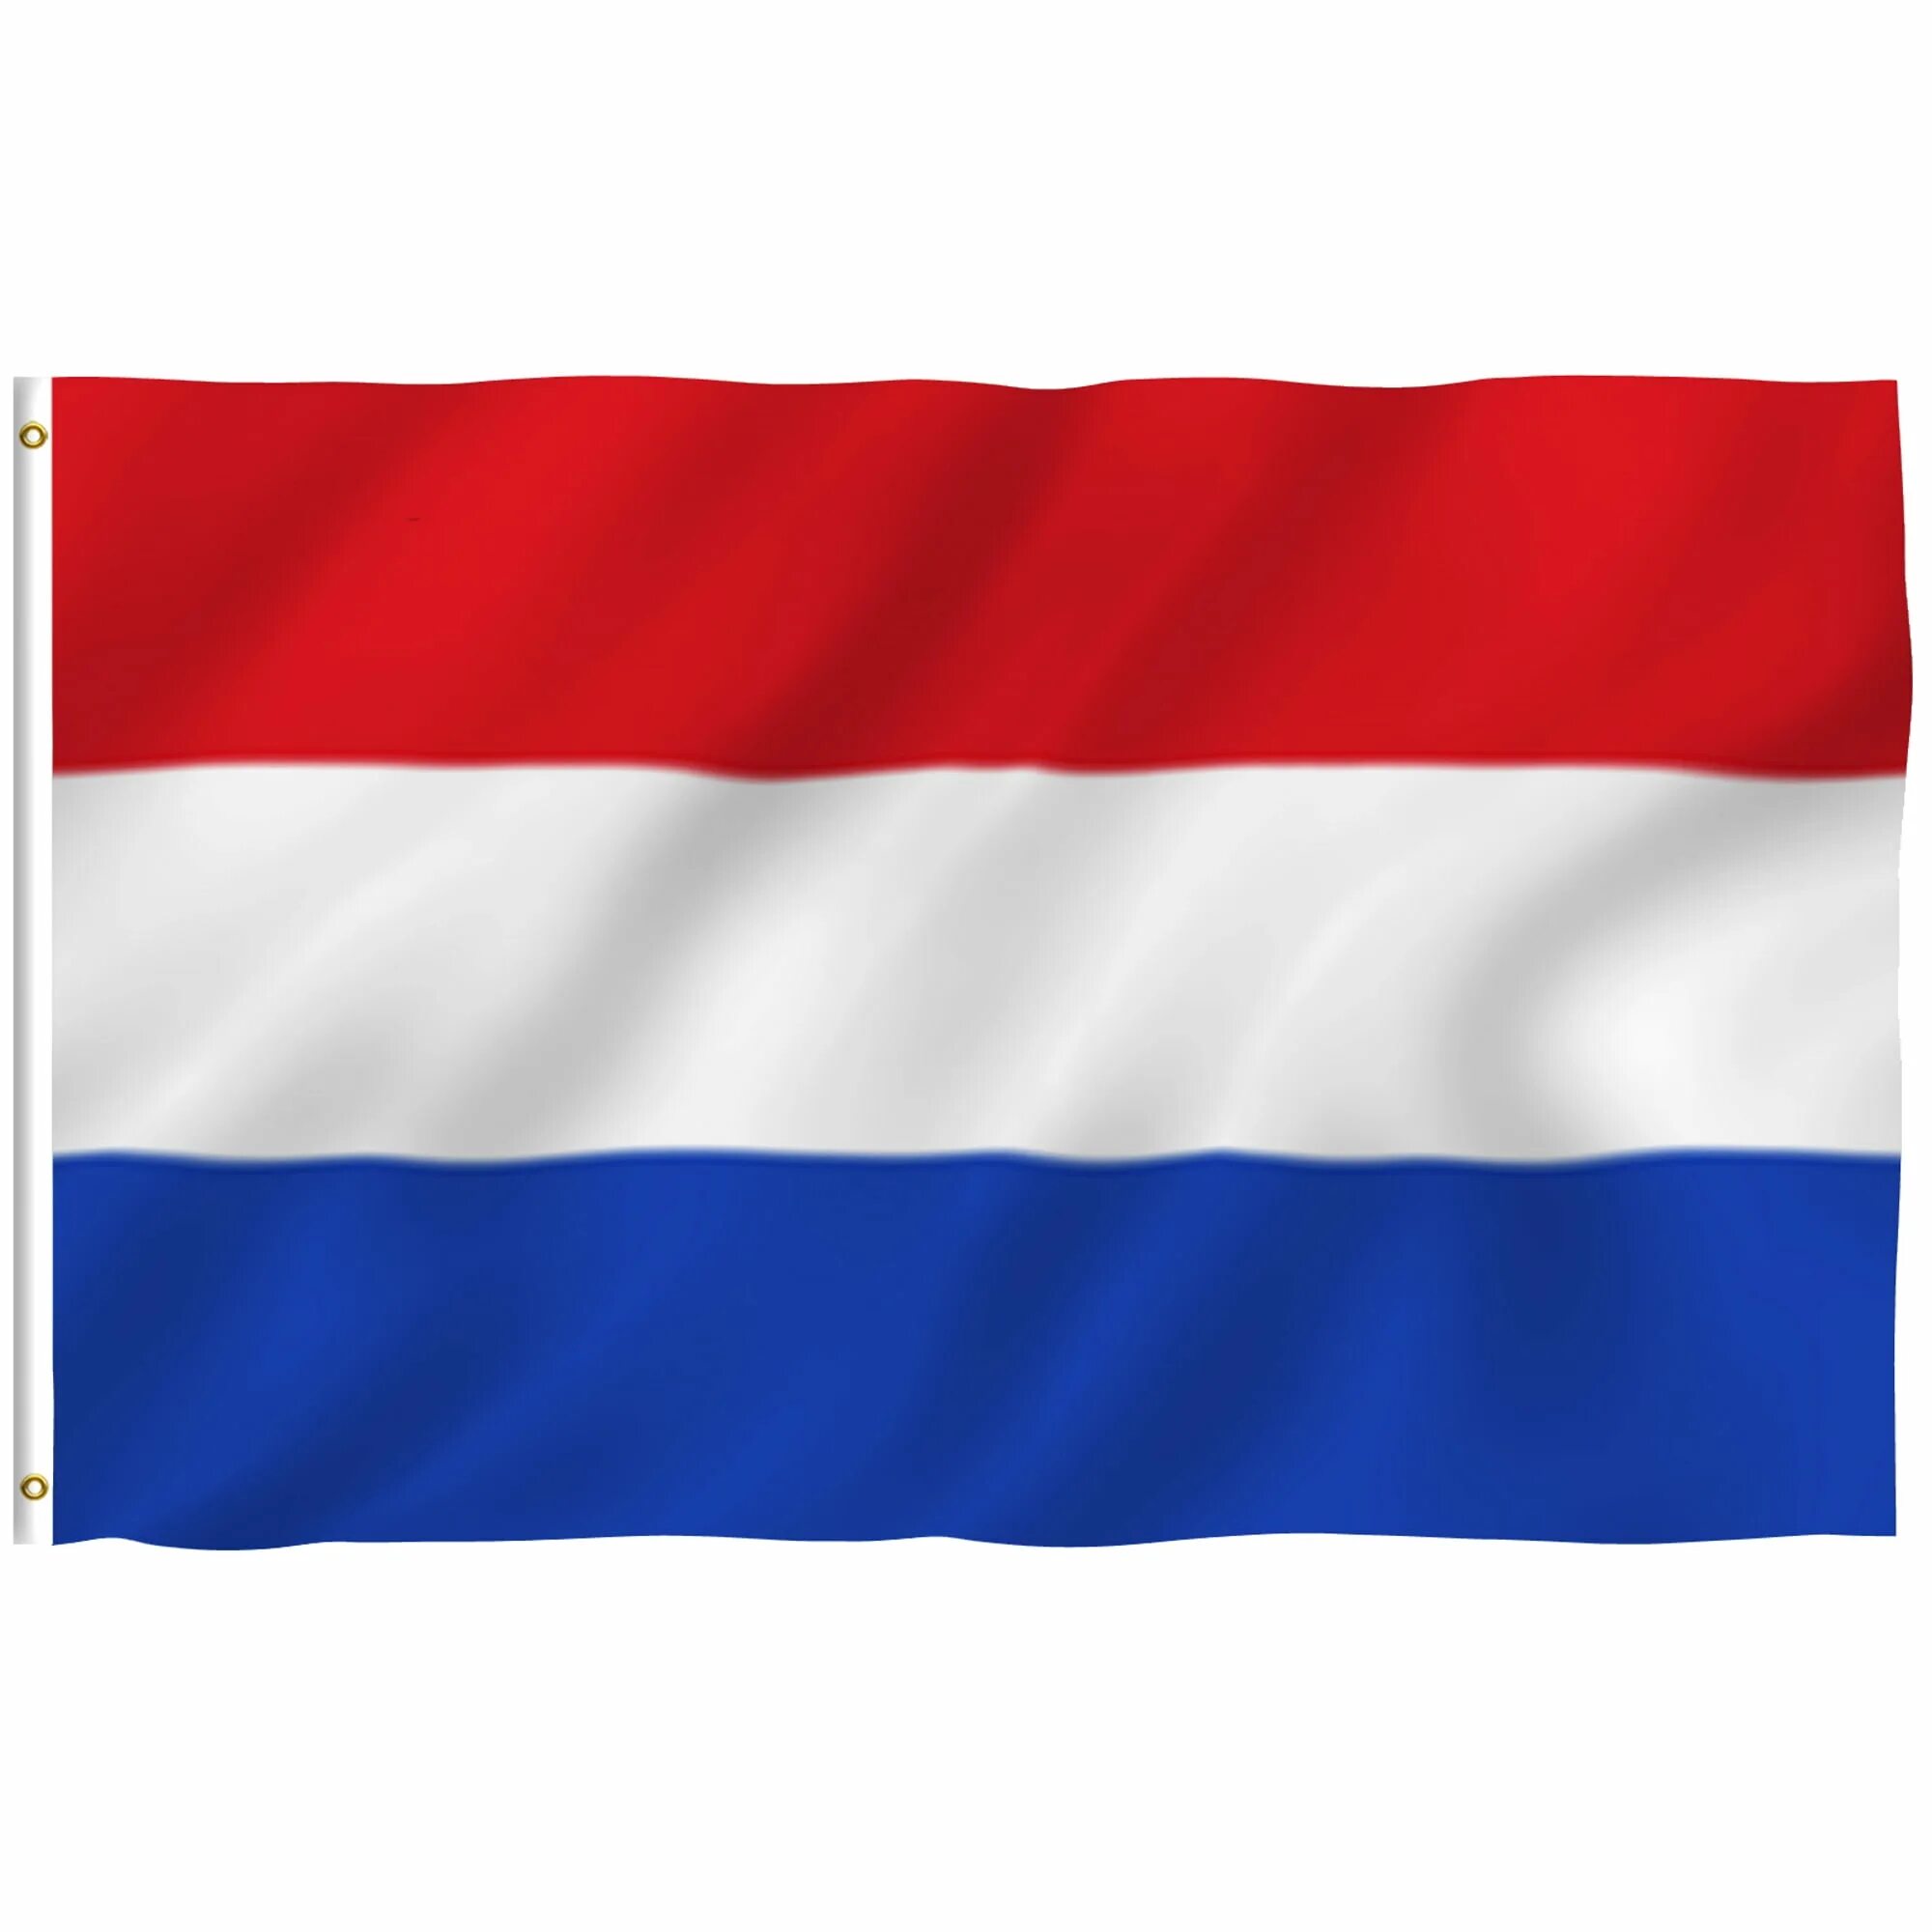 Как выглядит флаг картинка. Флаг Голландия. Нидерланды Flag. Флаг Нидерландов флаг Нидерландов. Флаг Голландии 1936.